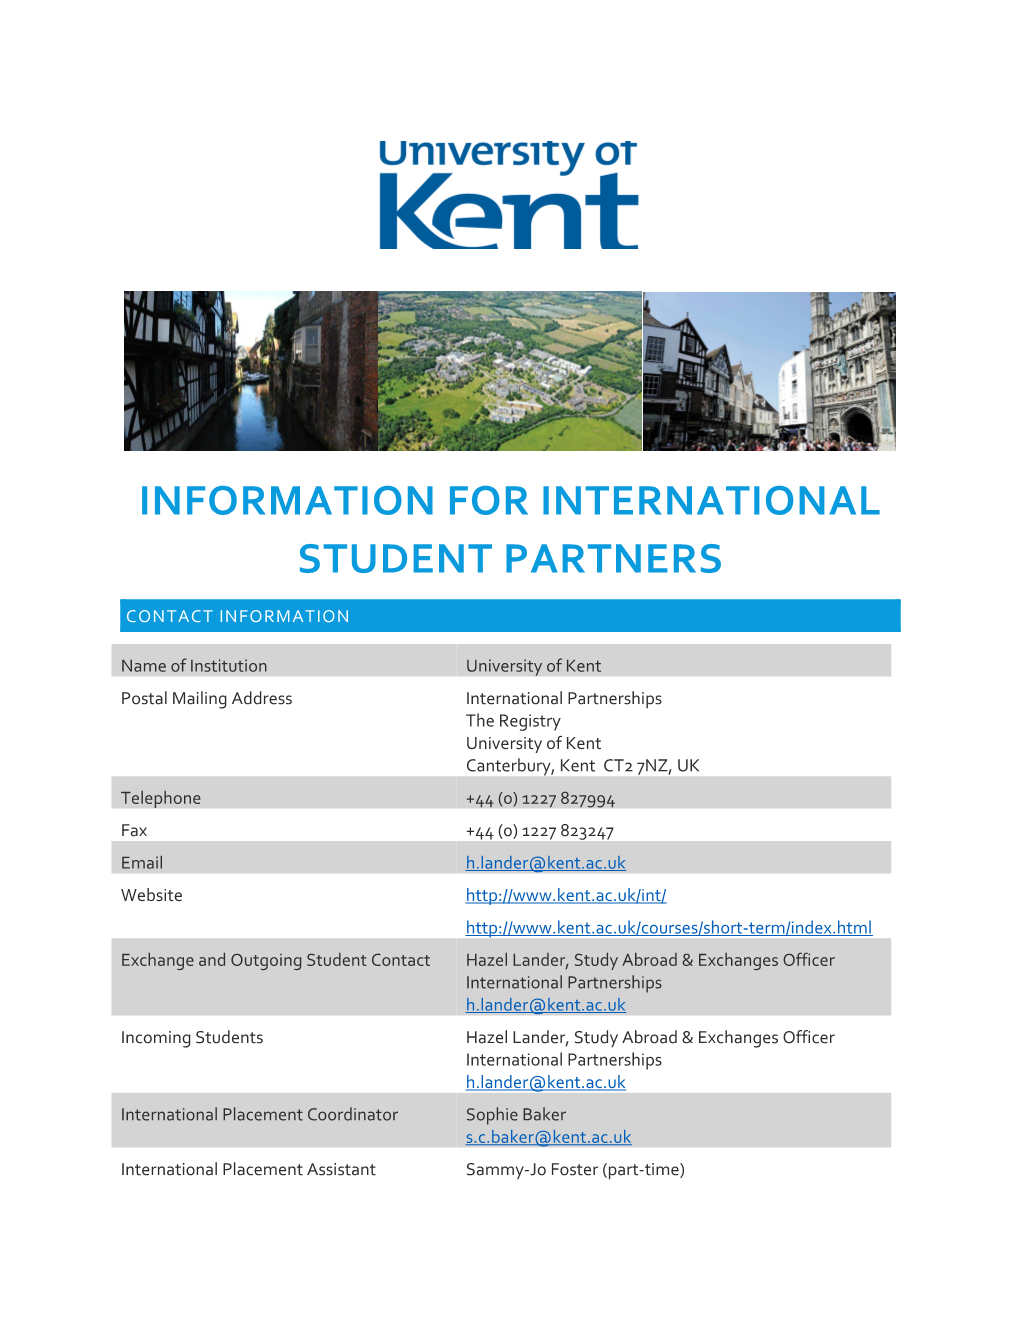 Information for International Student Partners